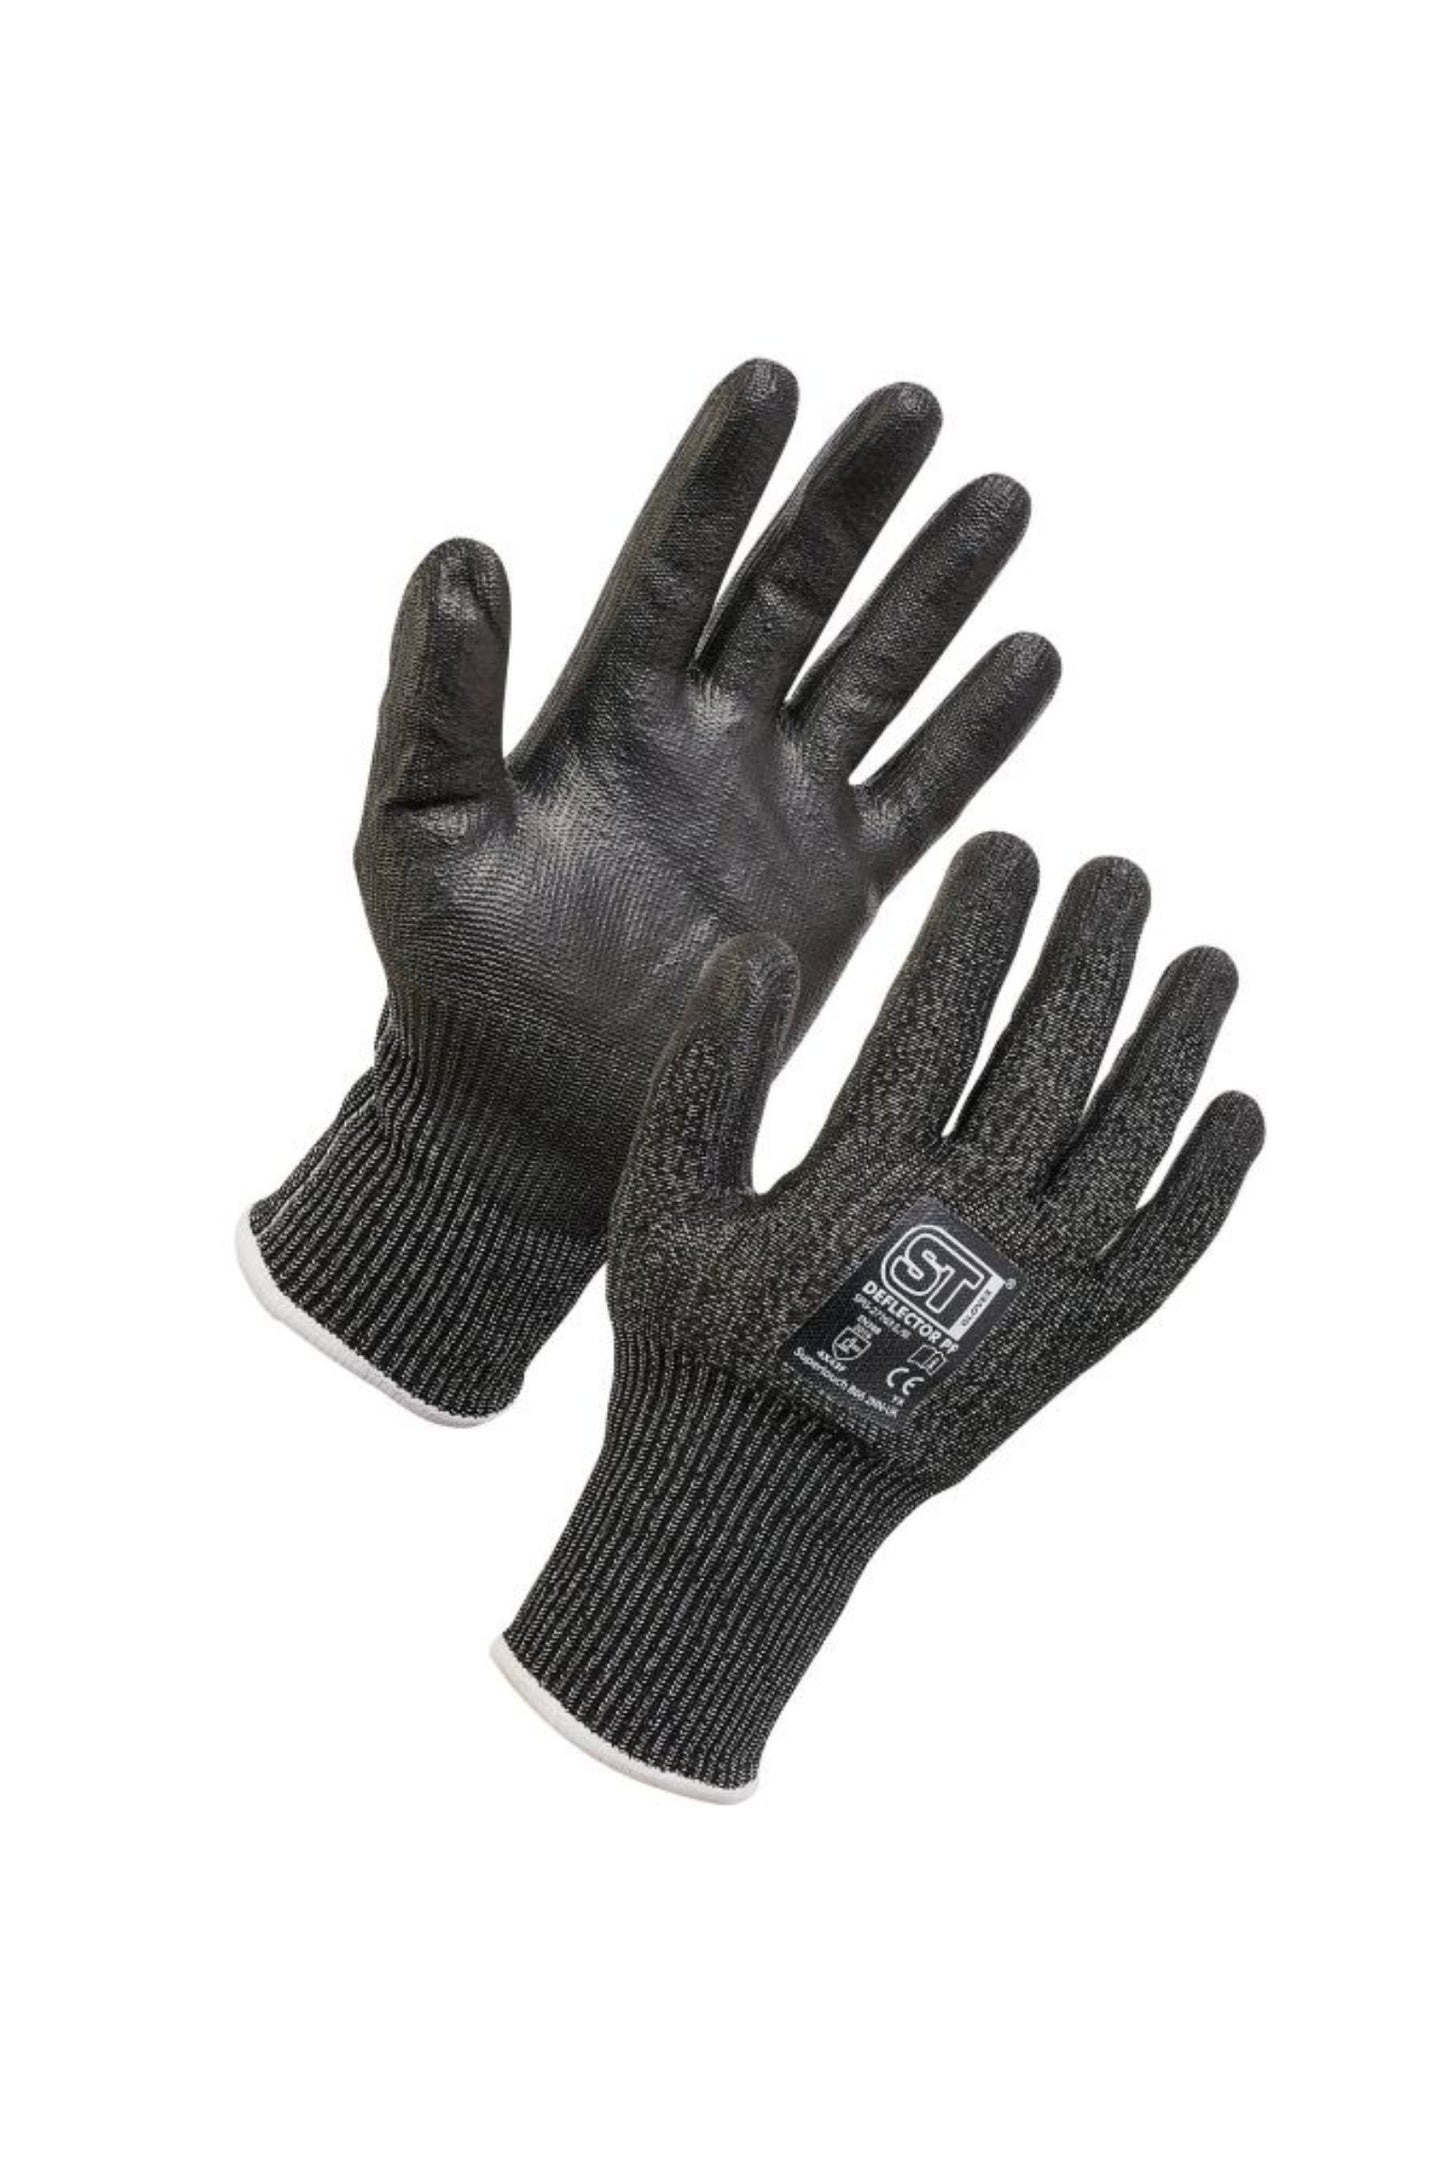 Deflector PF -Black Nitrile Foam Glove